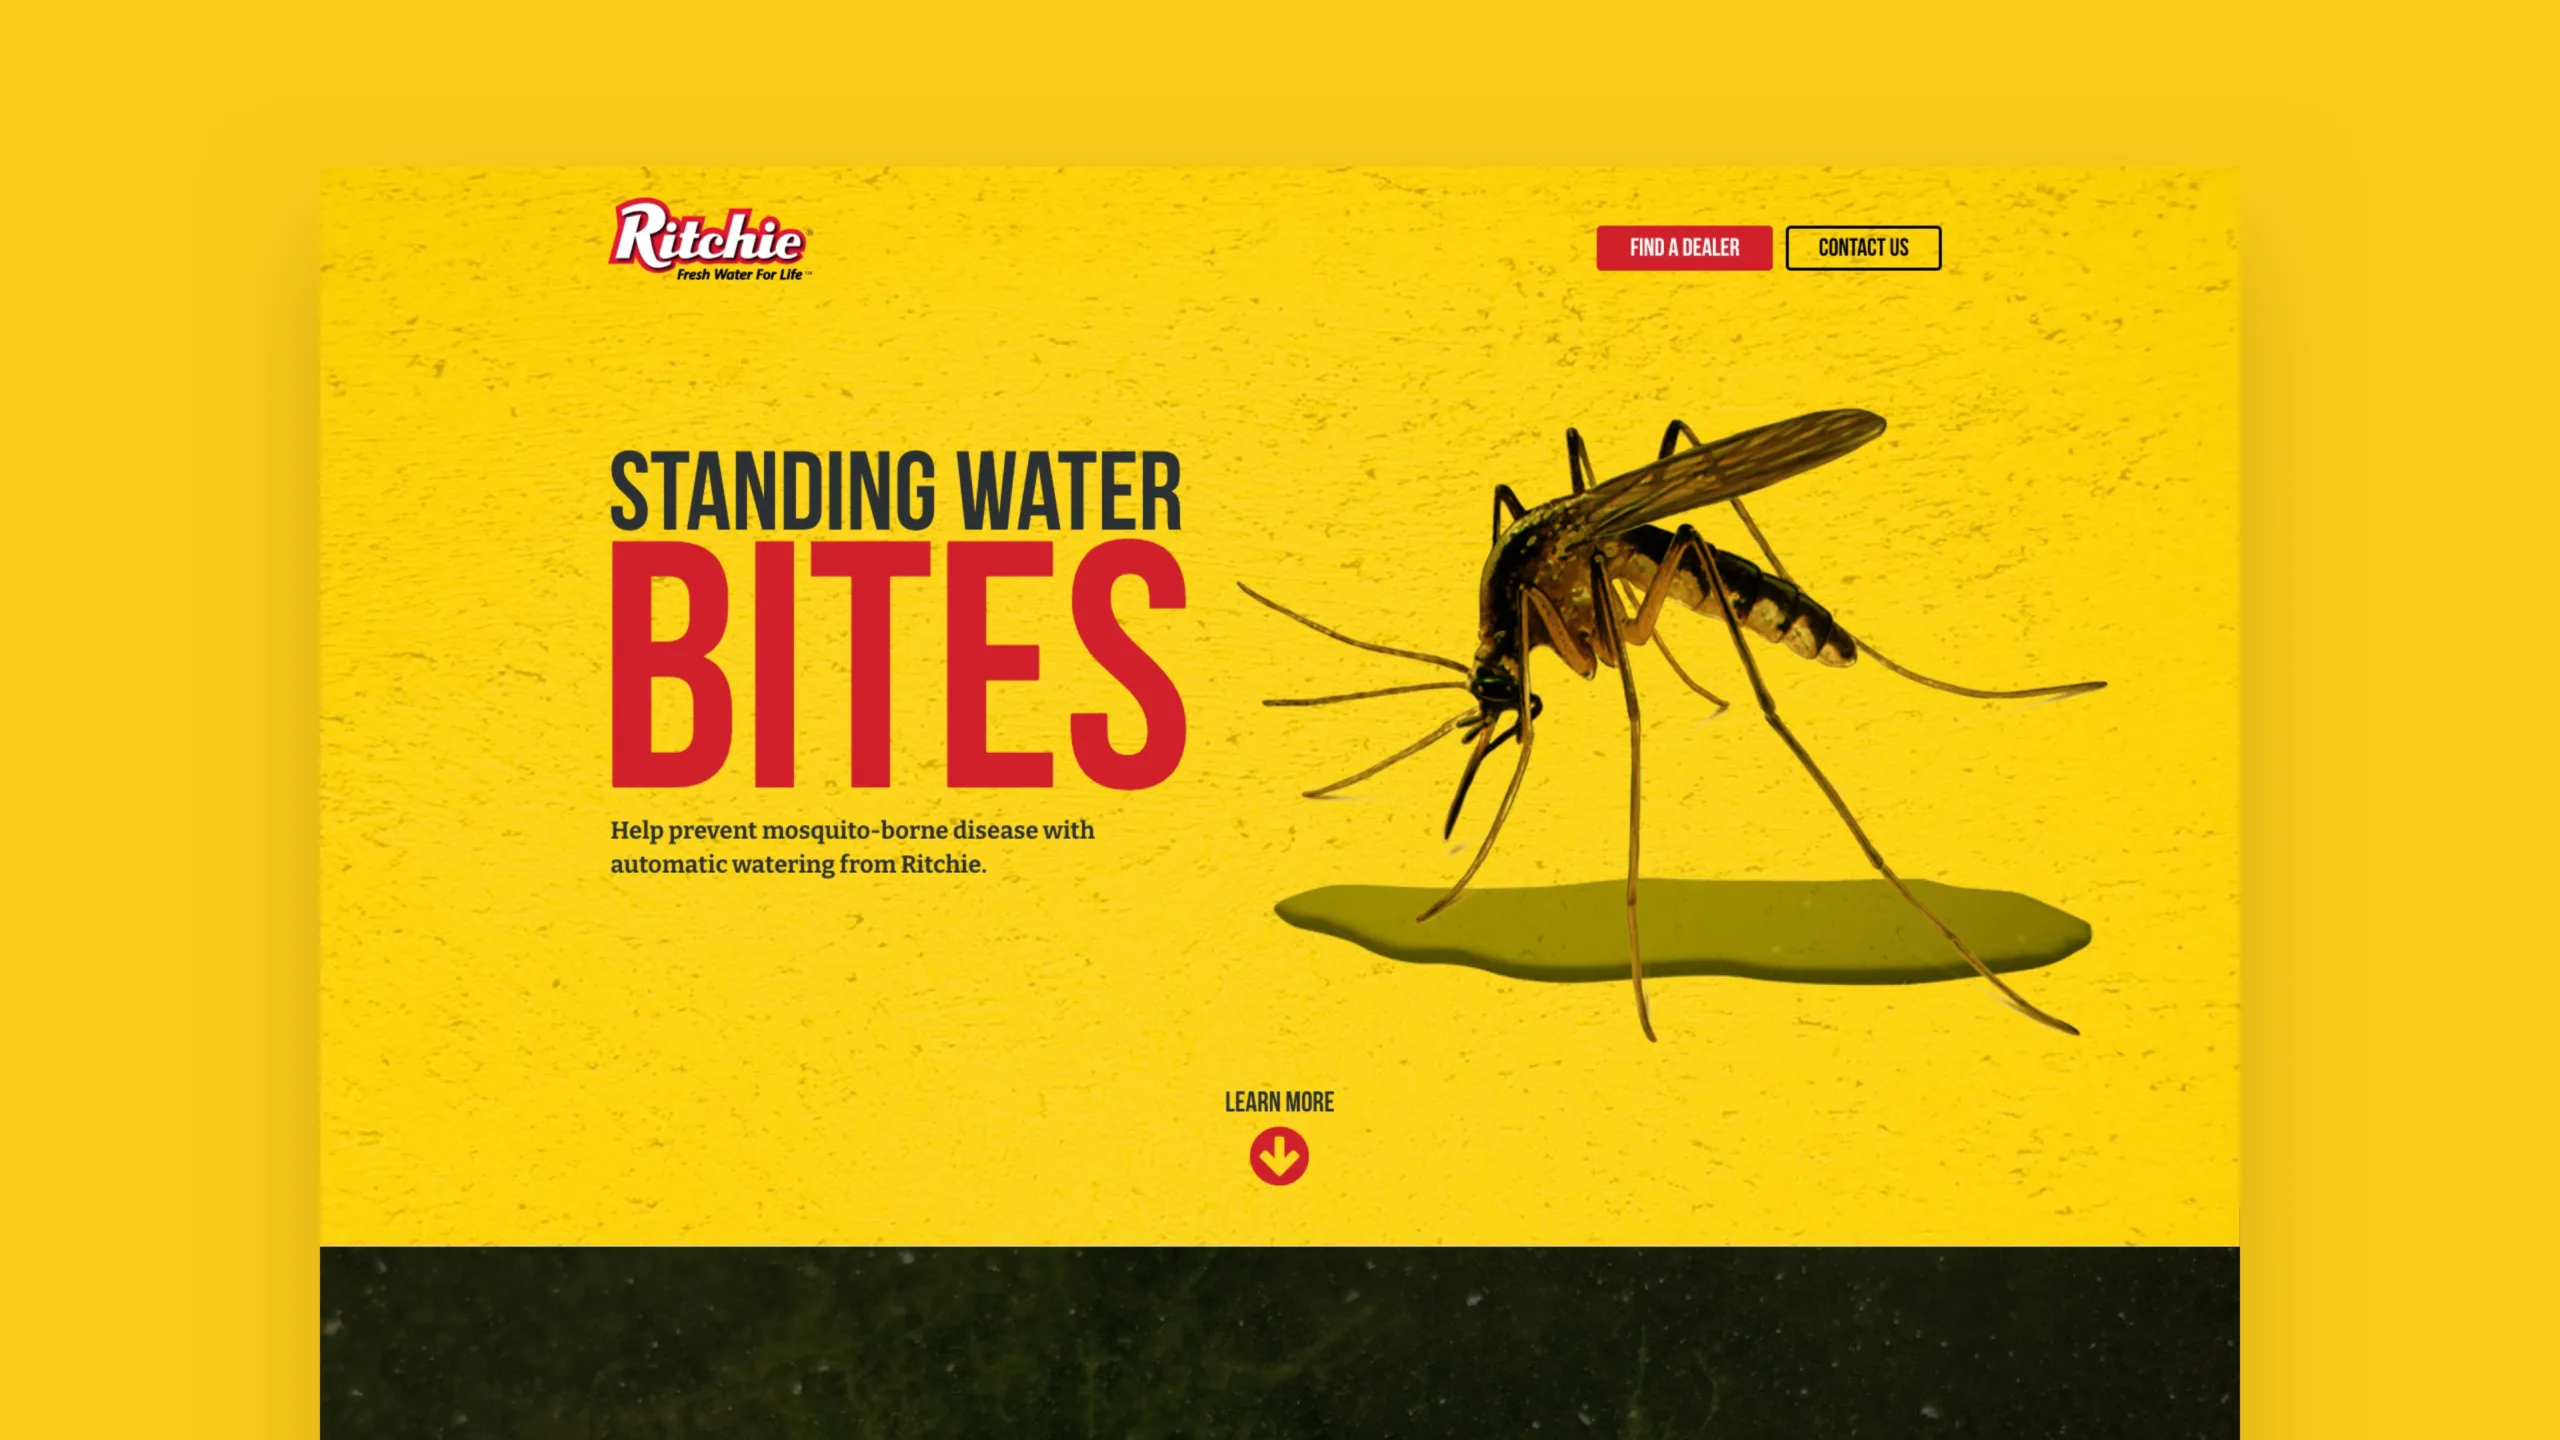 Standing Water Bites Ritchie microsite